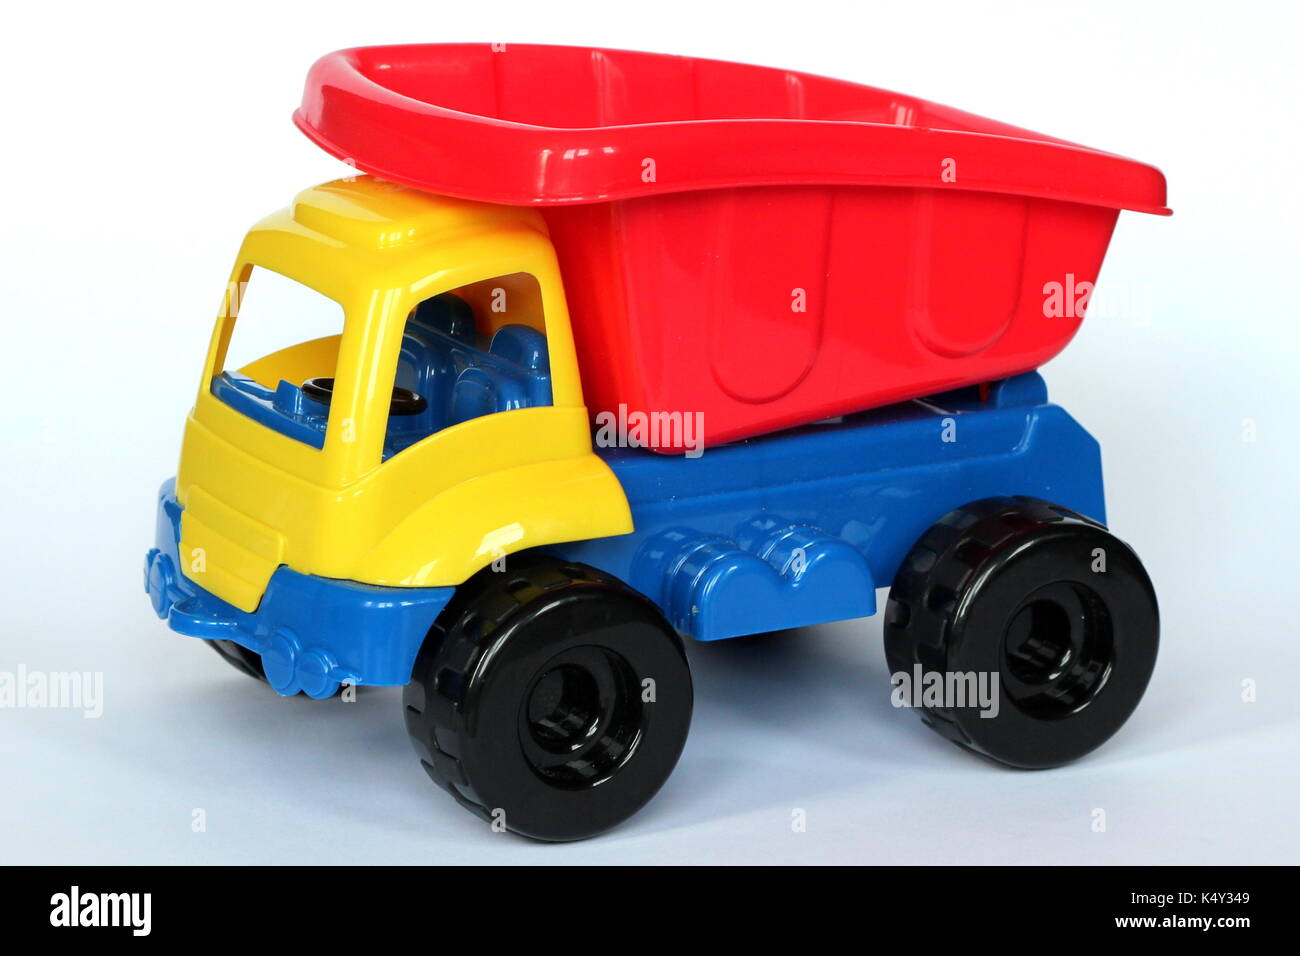 tipper truck toy